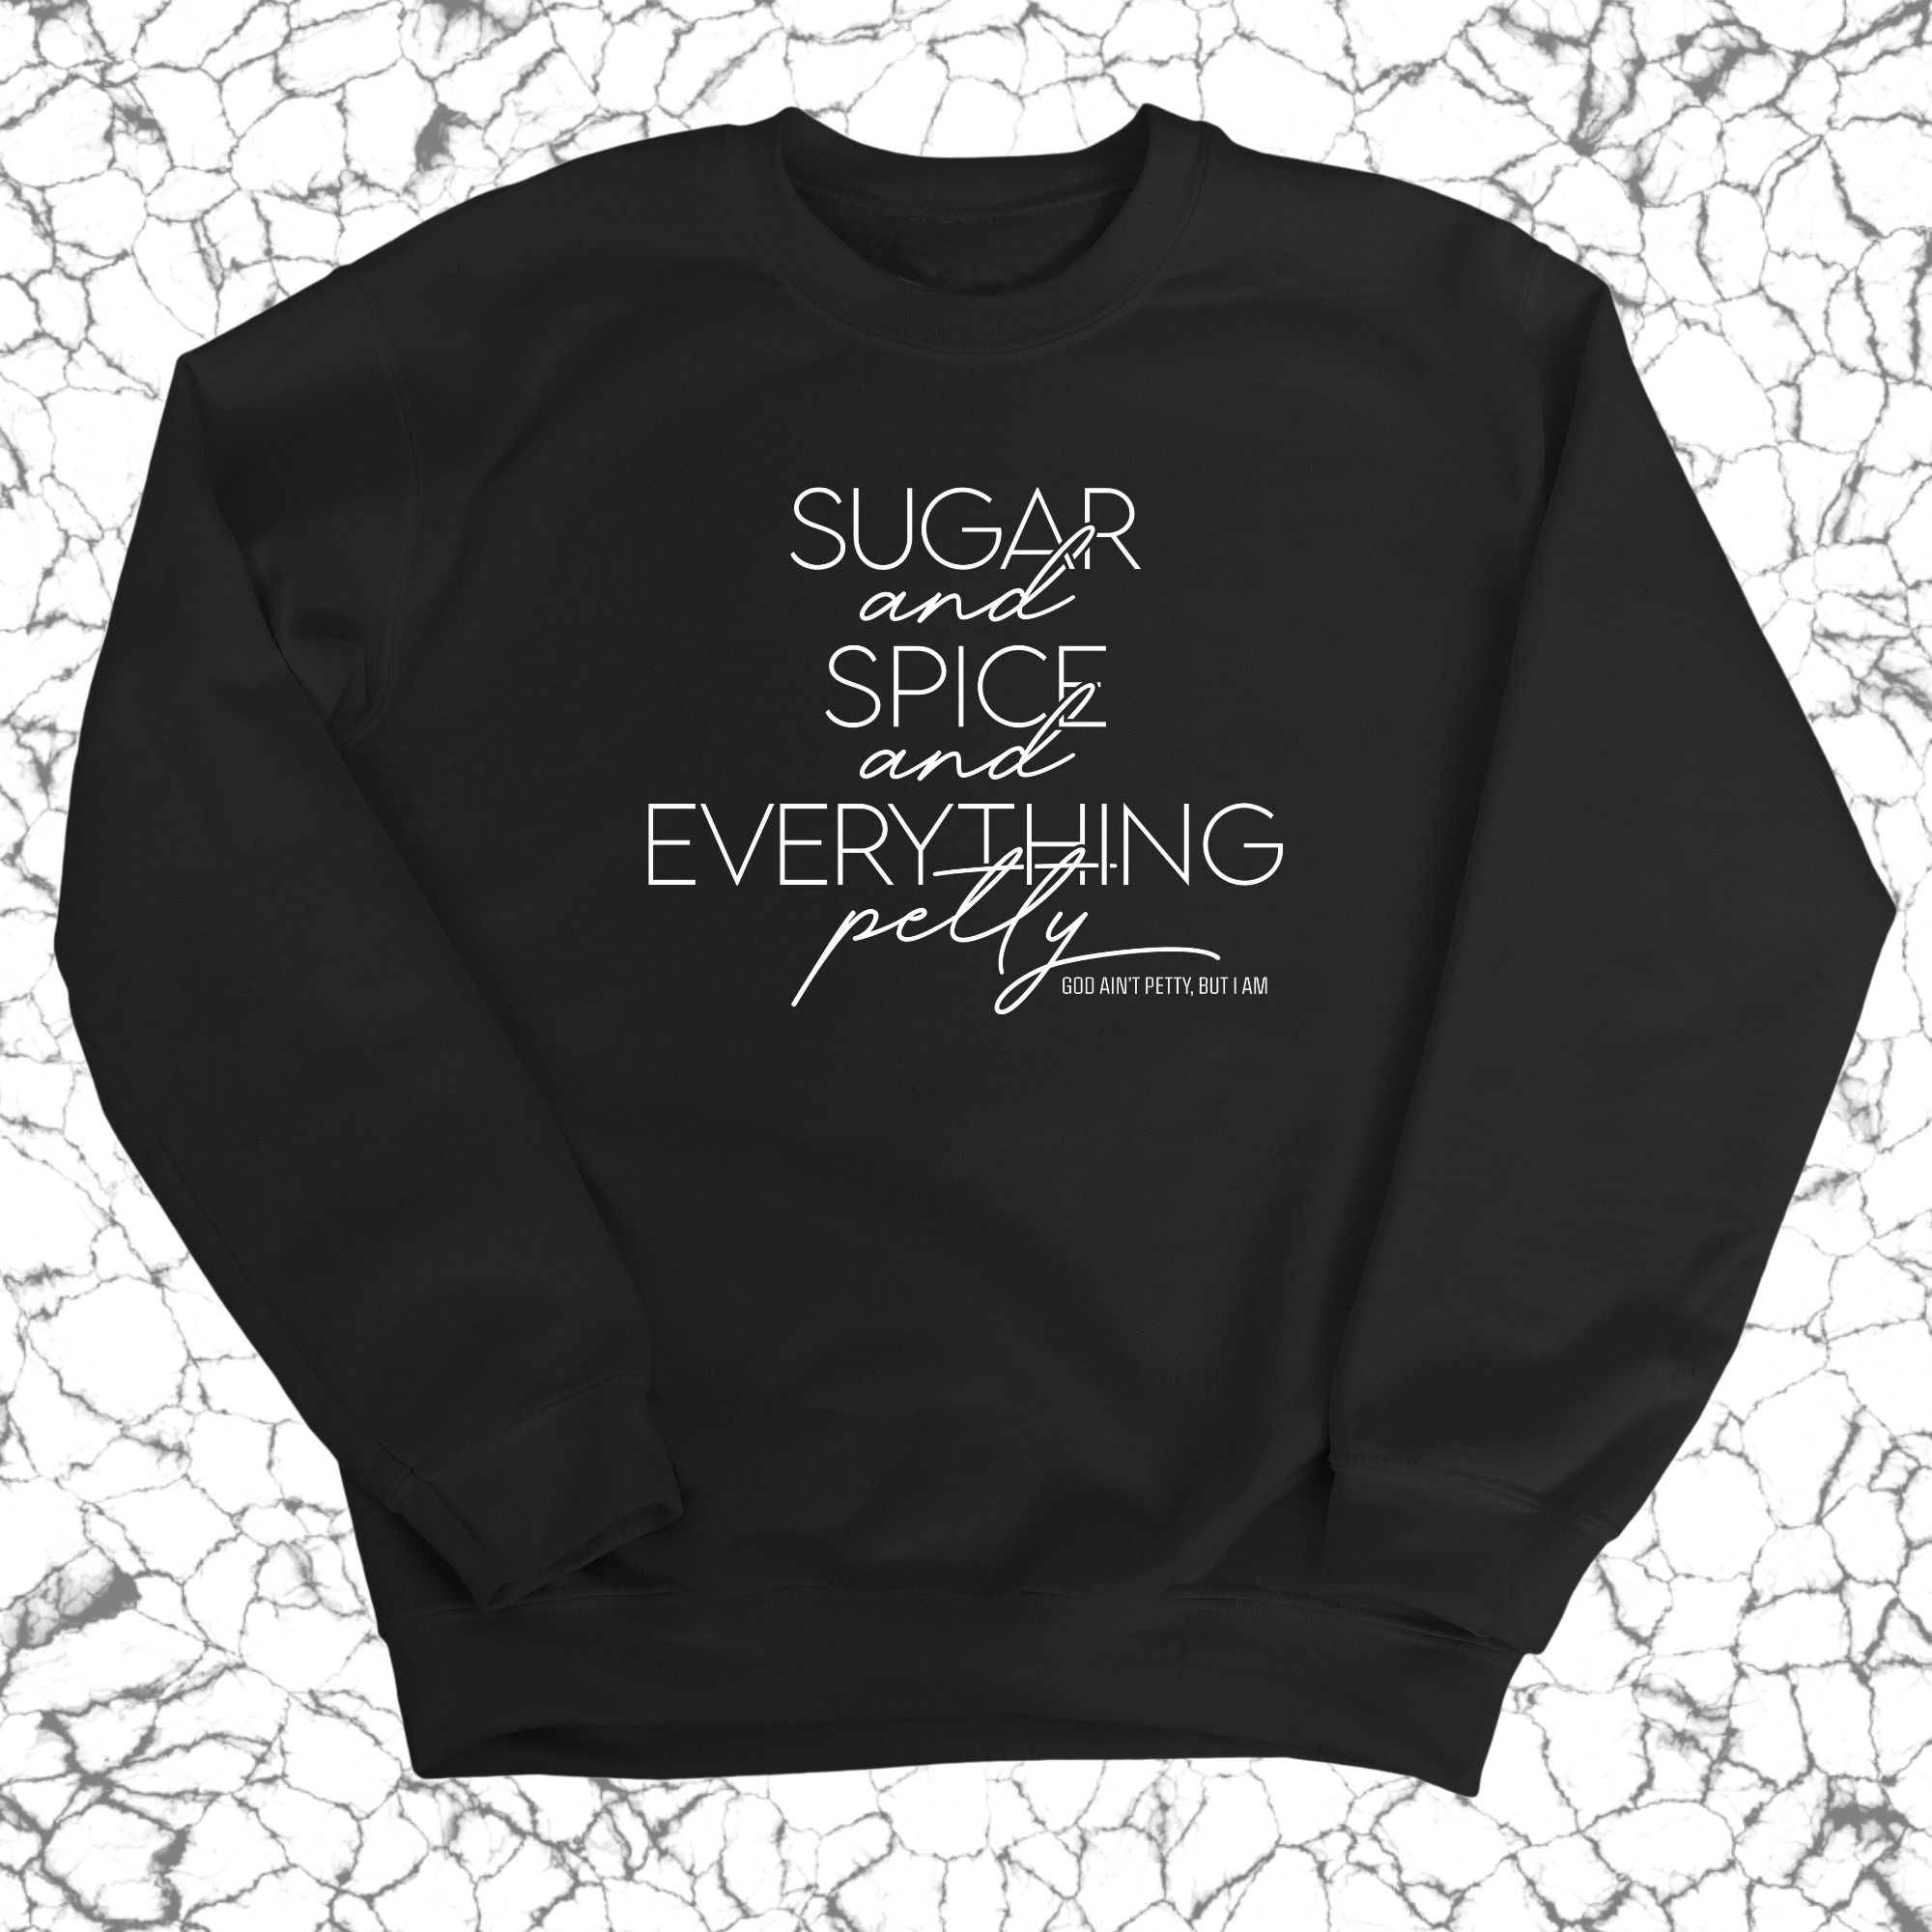 Sugar and Spice and Everything petty Unisex Sweatshirt-Sweatshirt-The Original God Ain't Petty But I Am